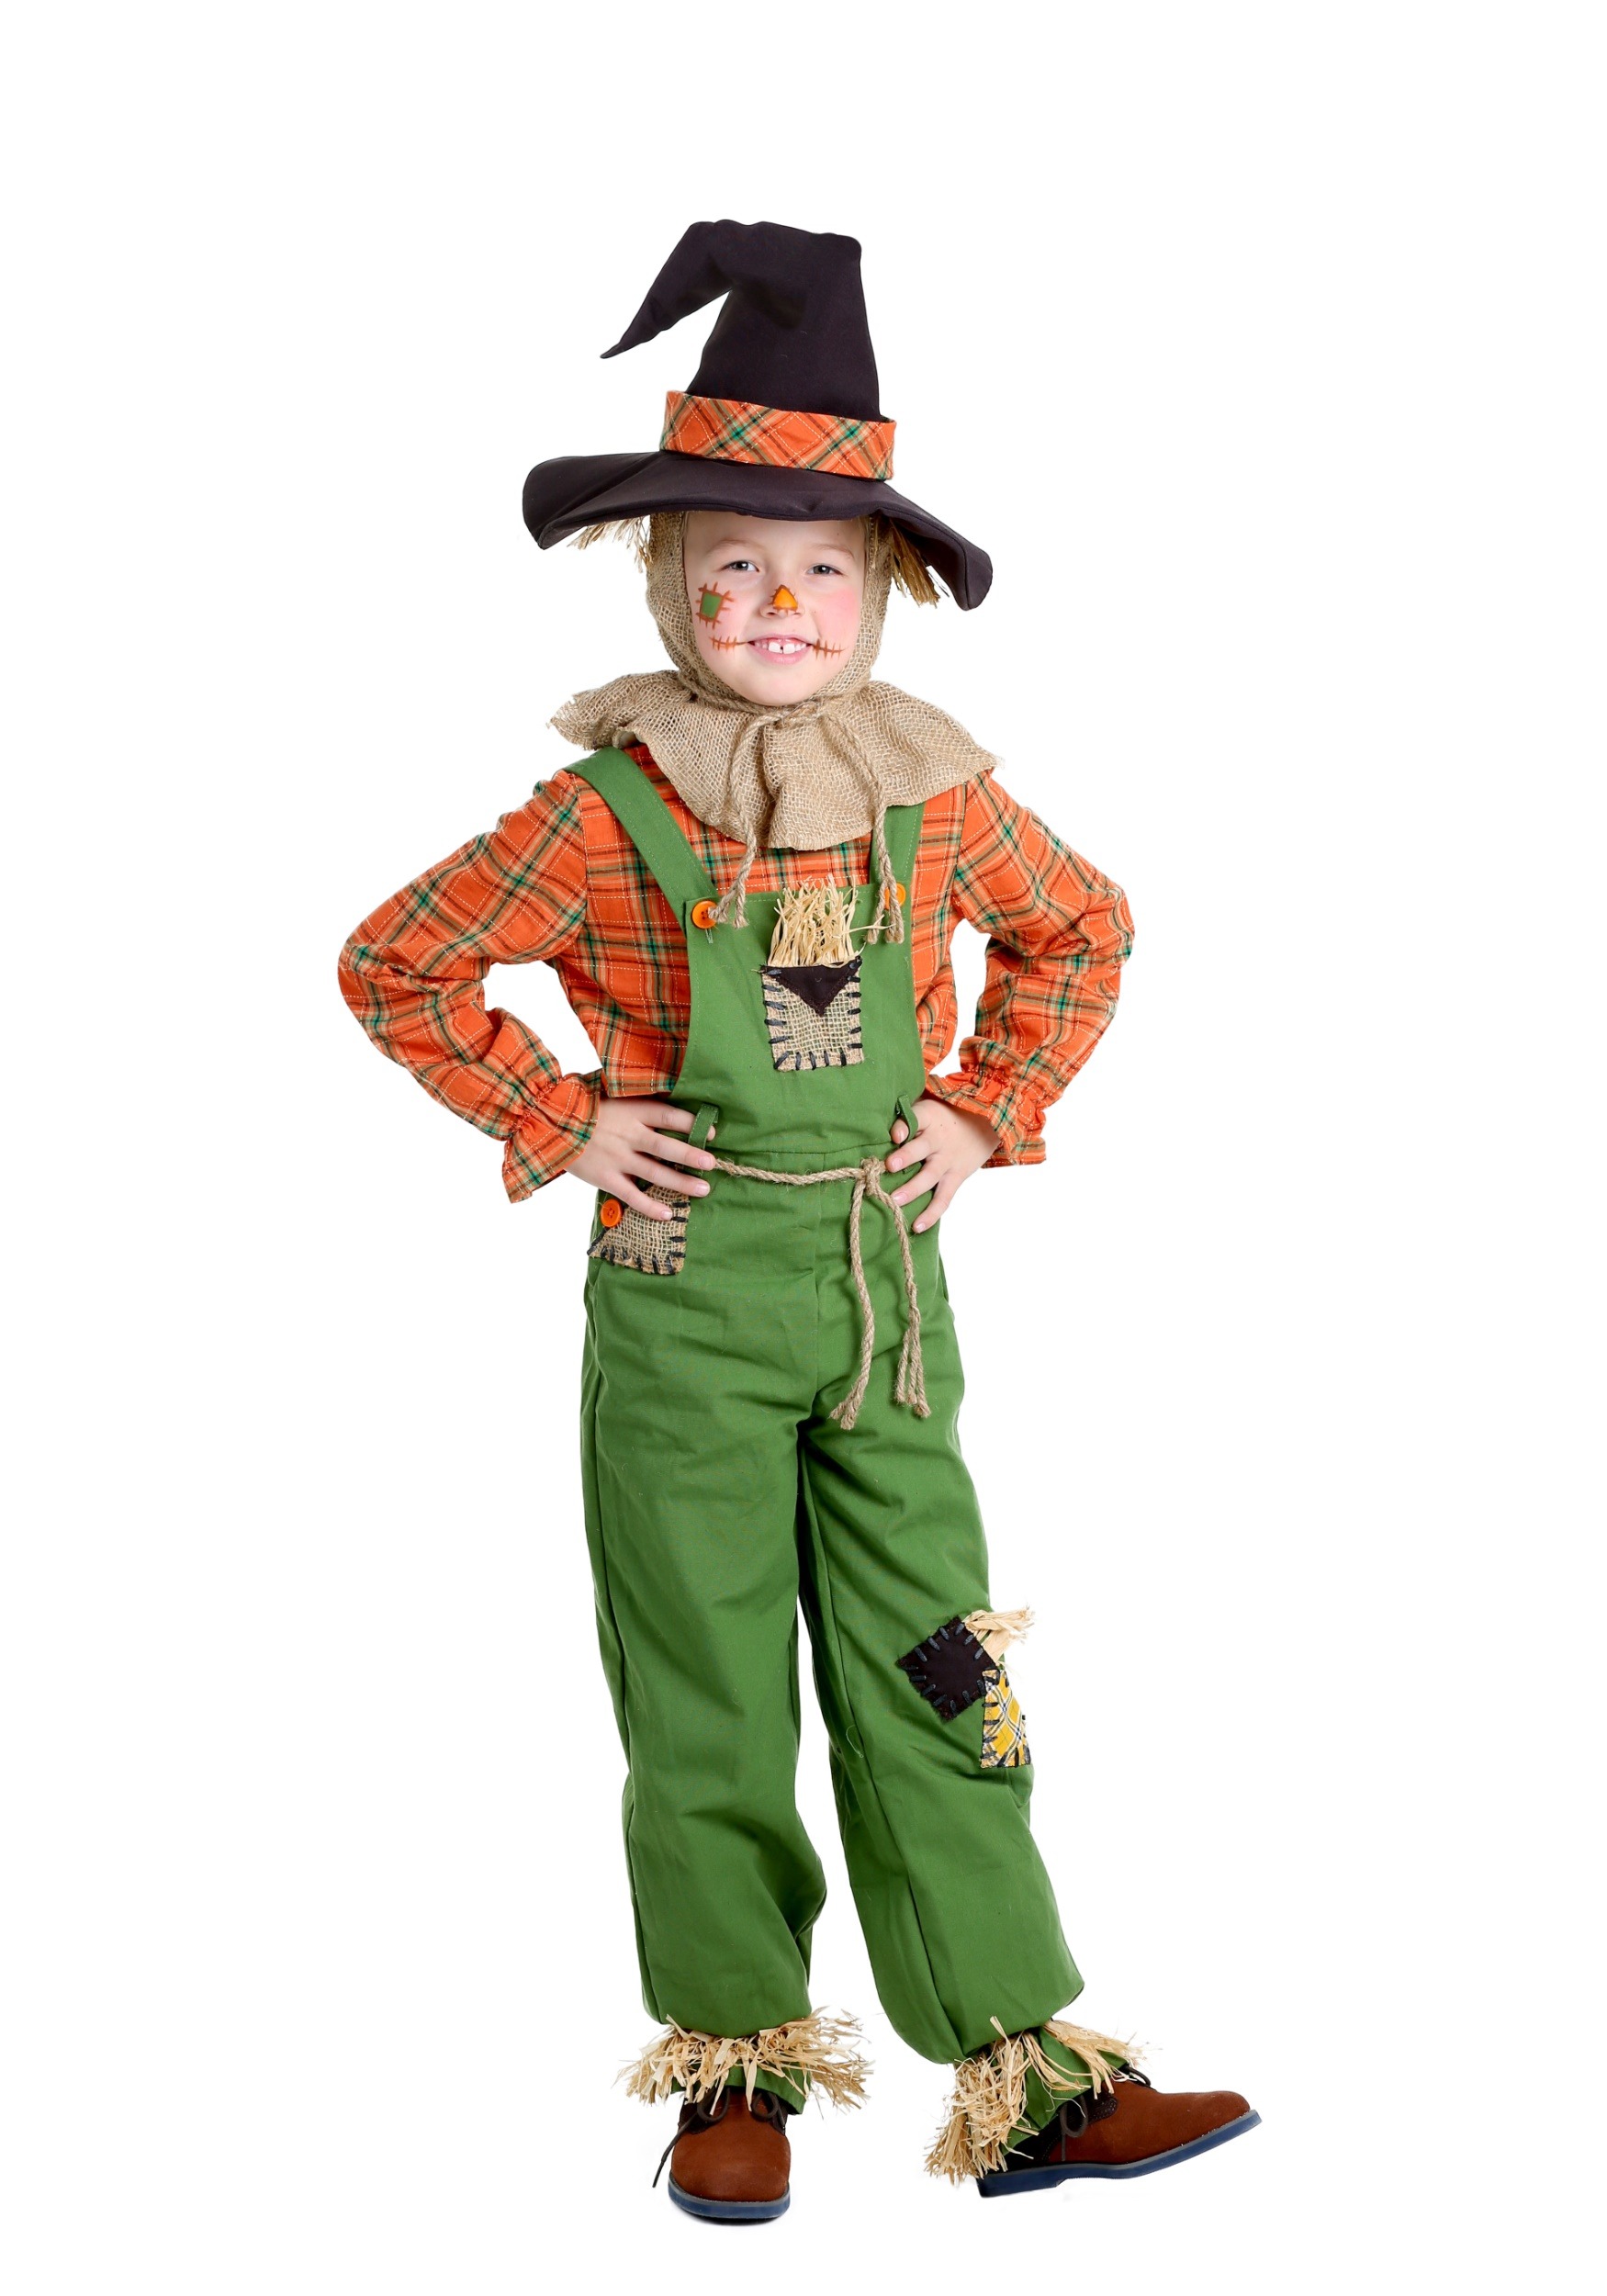 Photos - Fancy Dress FUN Costumes Scarecrow Boy Costume Brown/Green/Orange FUN0244CH